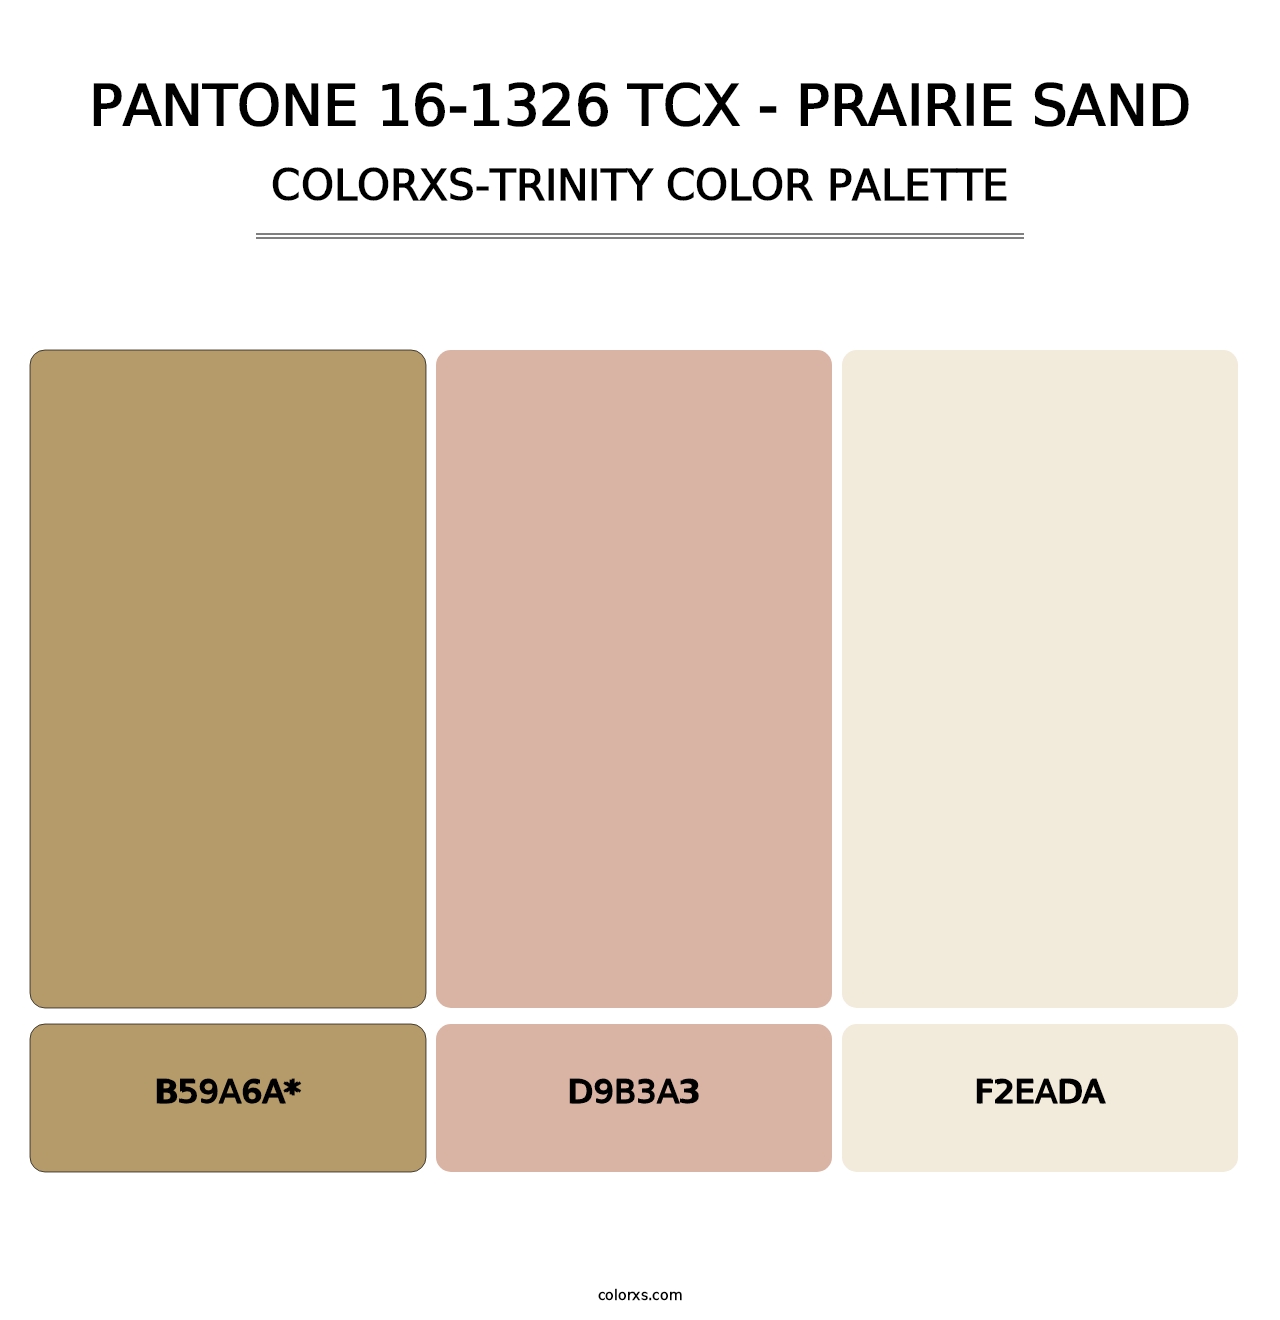 PANTONE 16-1326 TCX - Prairie Sand - Colorxs Trinity Palette